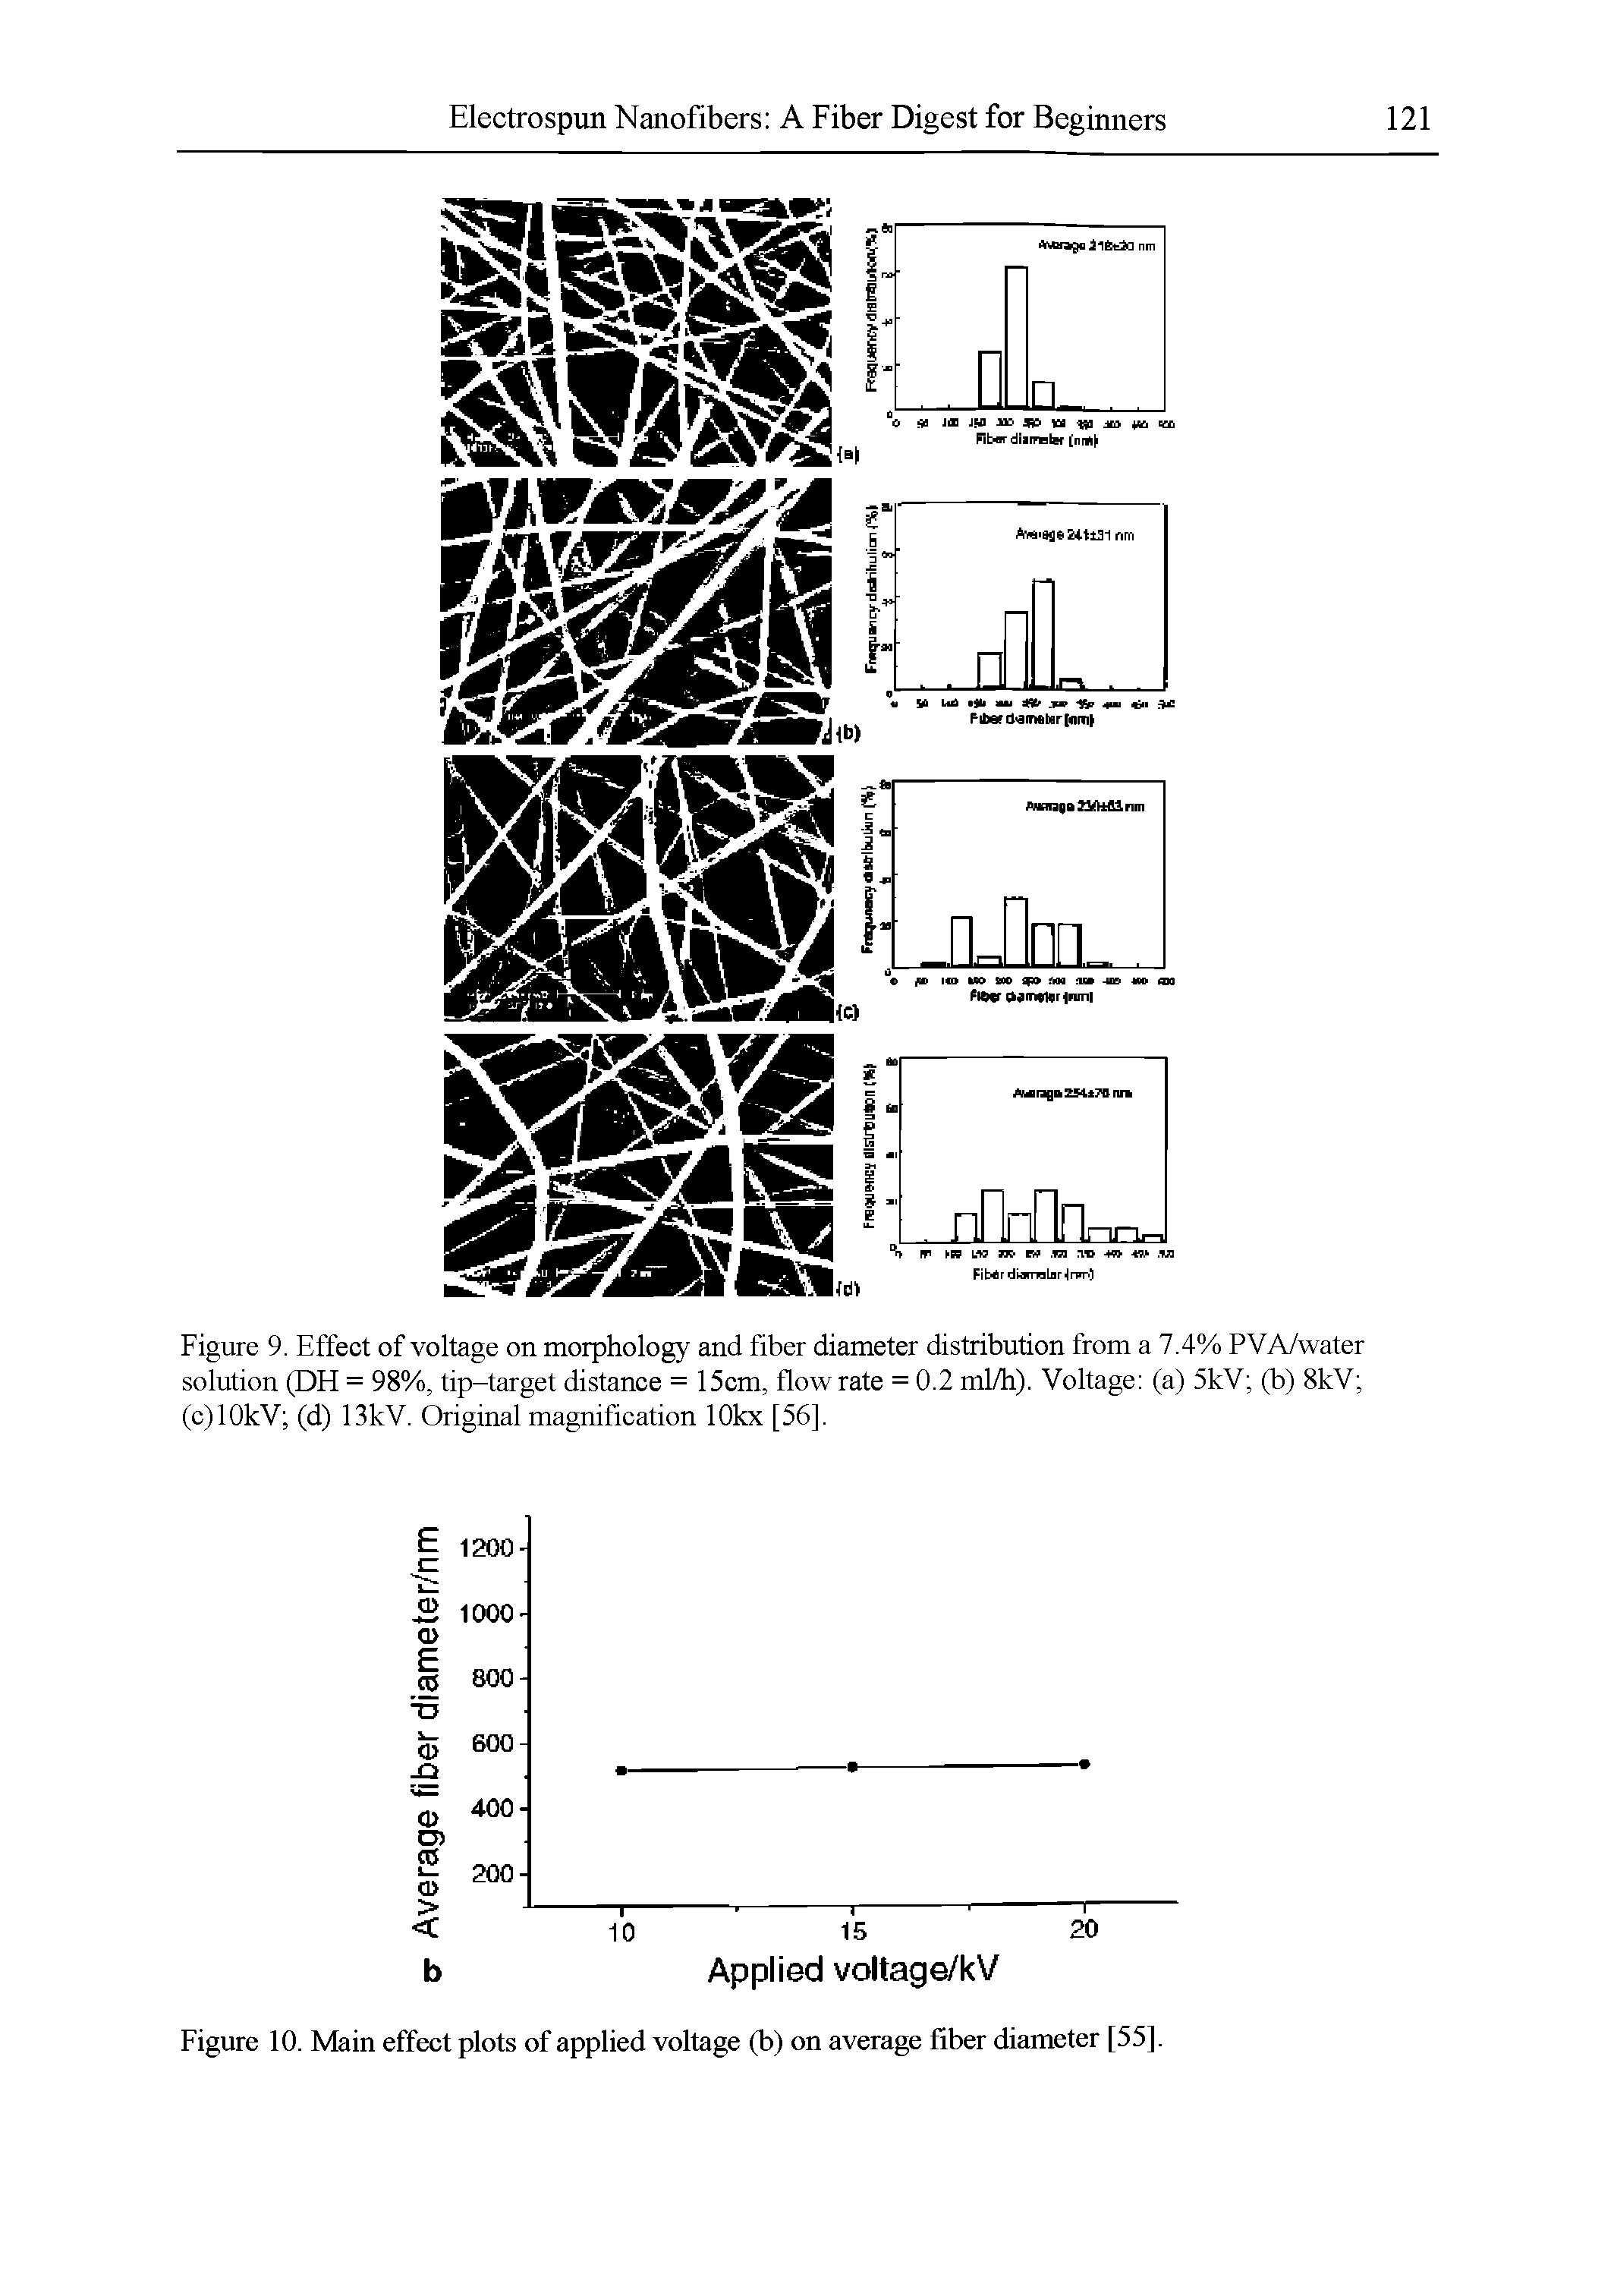 Figure 9. Effect of voltage on morphology and fiber diameter distribution from a 7.4% PVA/water solution (DH = 98%, tip-target distance = 15cm, flowrate = 0.2 ml/h). Voltage (a) 5kV (b) 8kV (c)lOkV (d) 13kV. Original magnification lOkx [56].